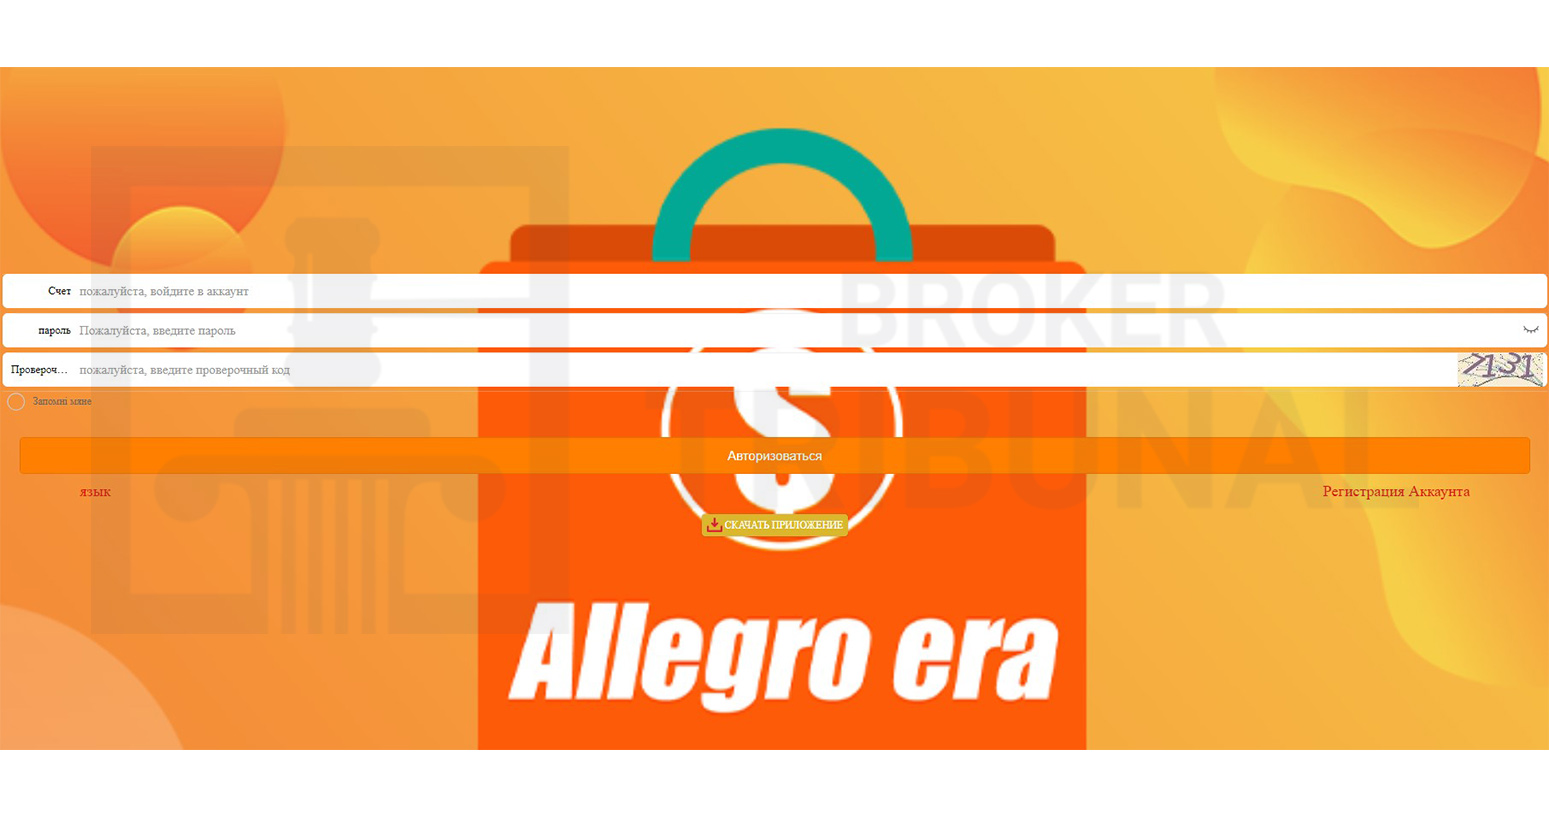 Allegro Era